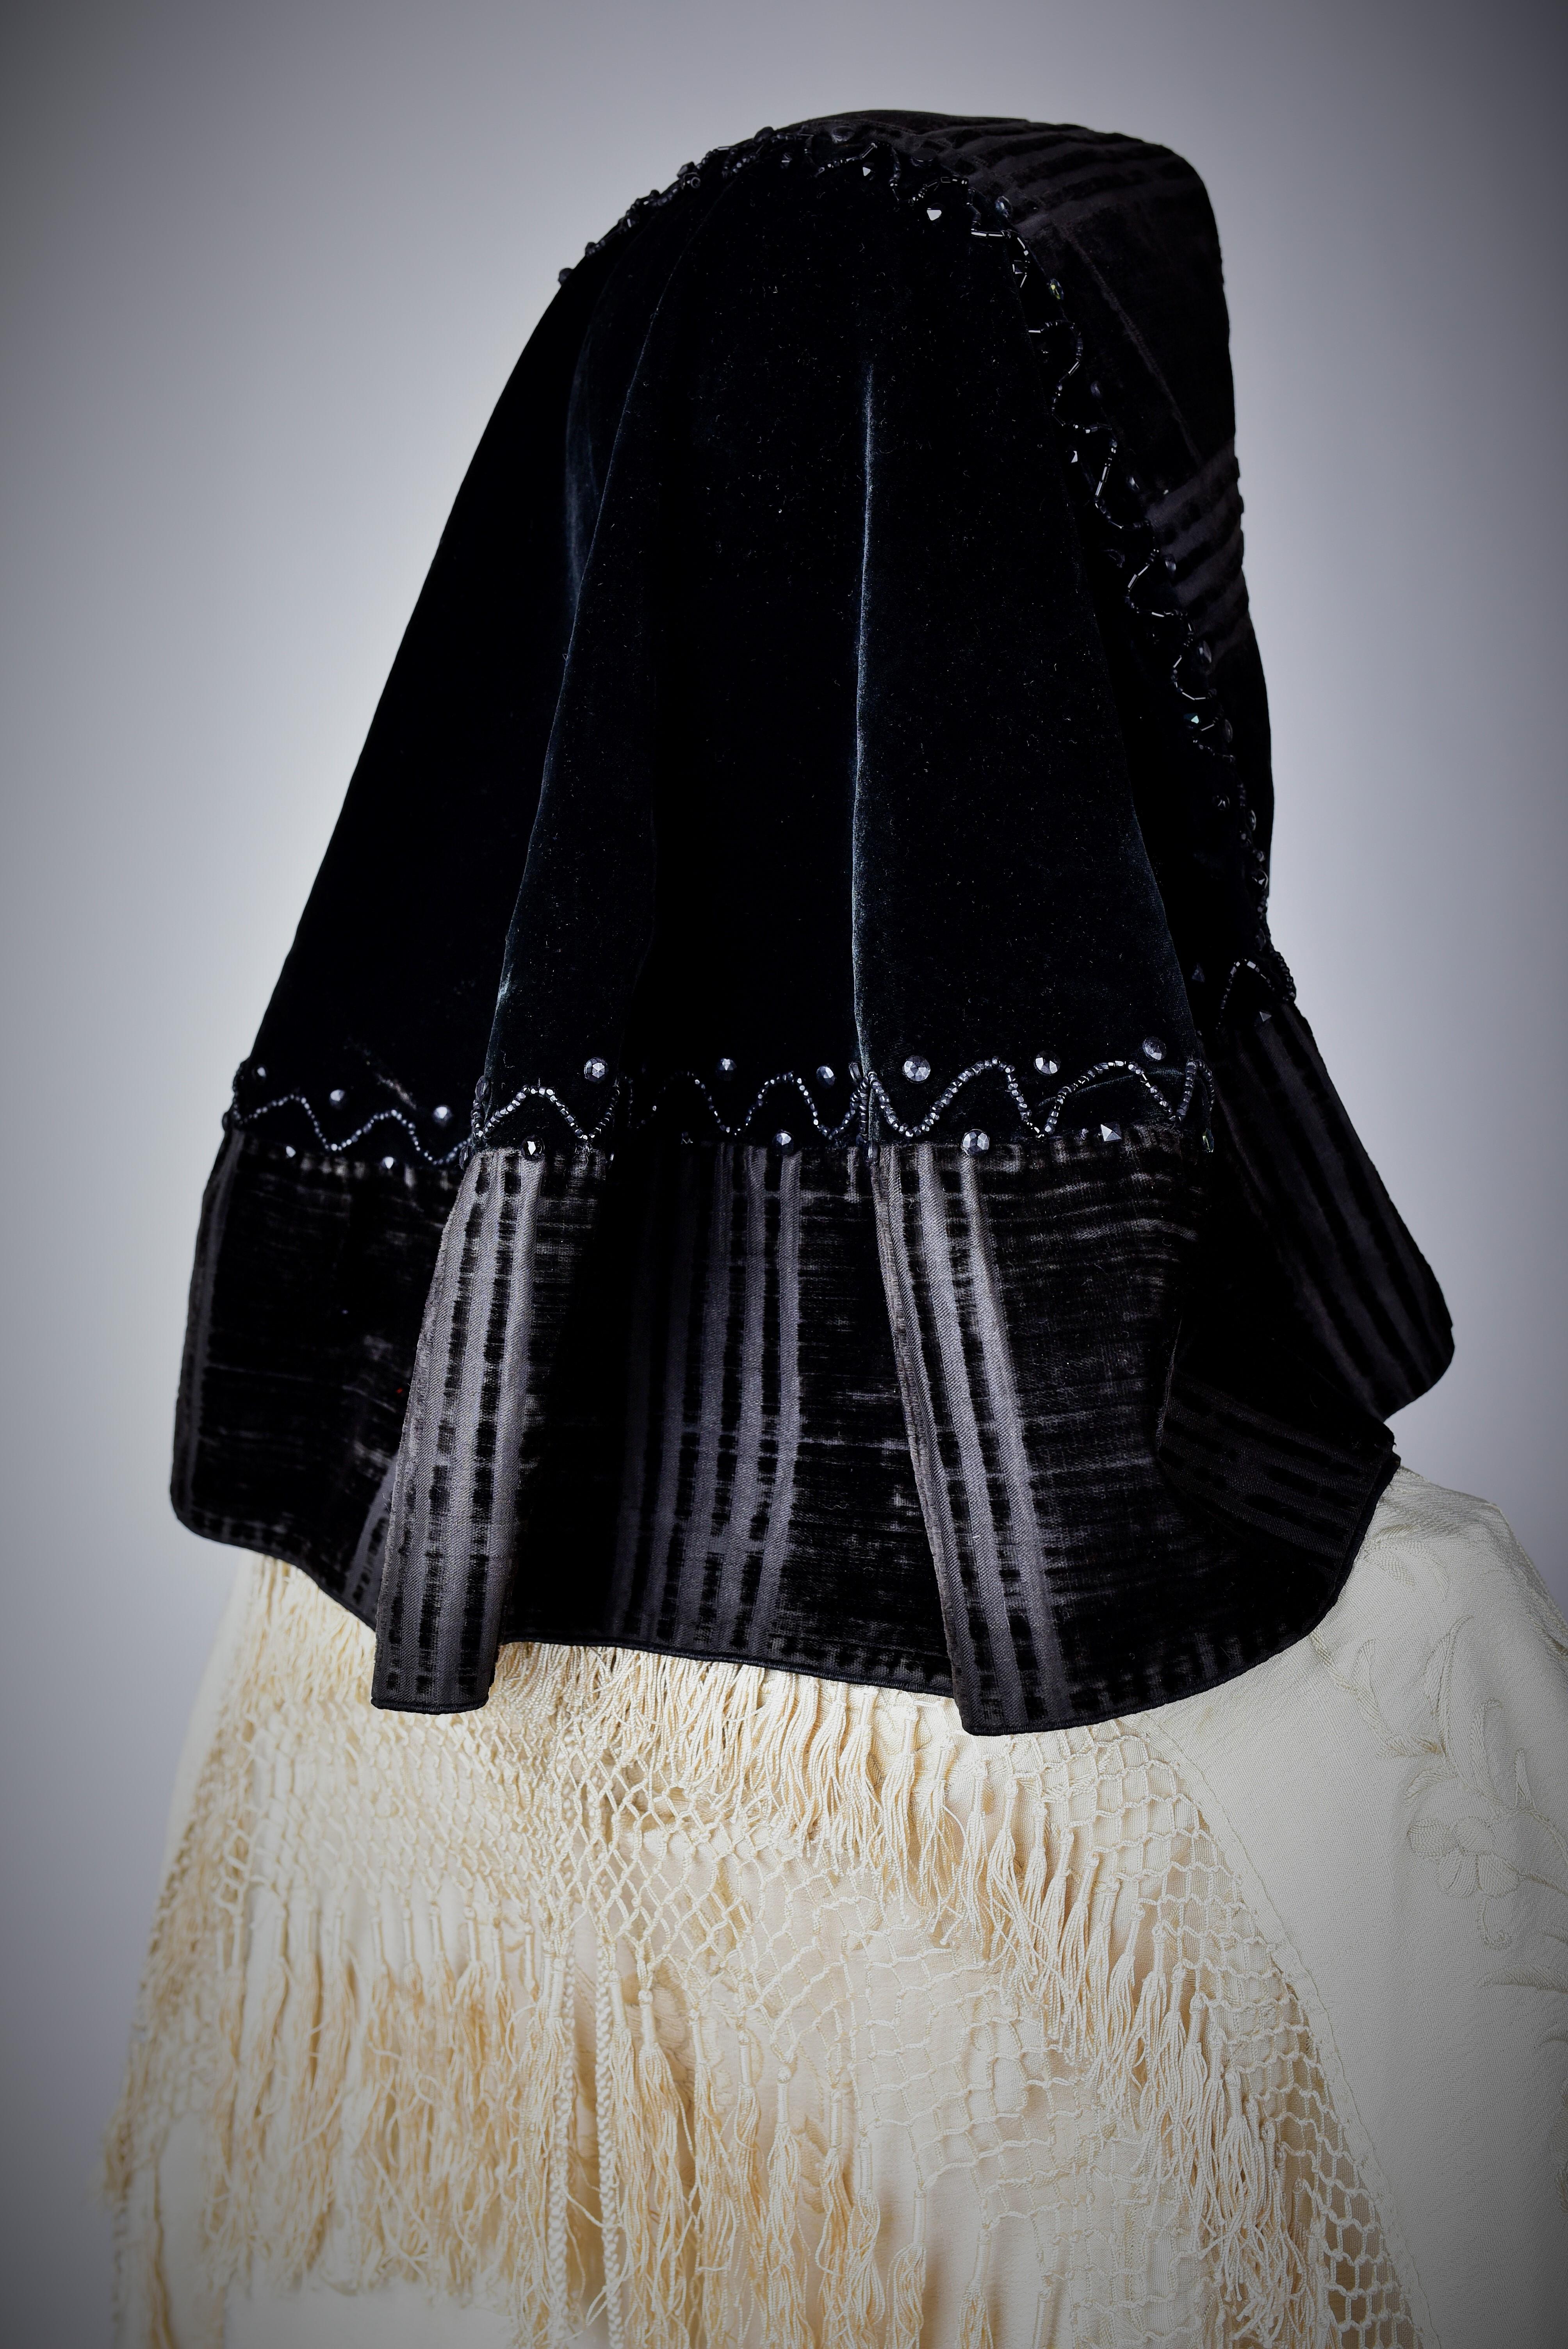 Women's Ceremonial Crinoline Dress, Mantilla and Manilla Shawl - Spain Circa 1860